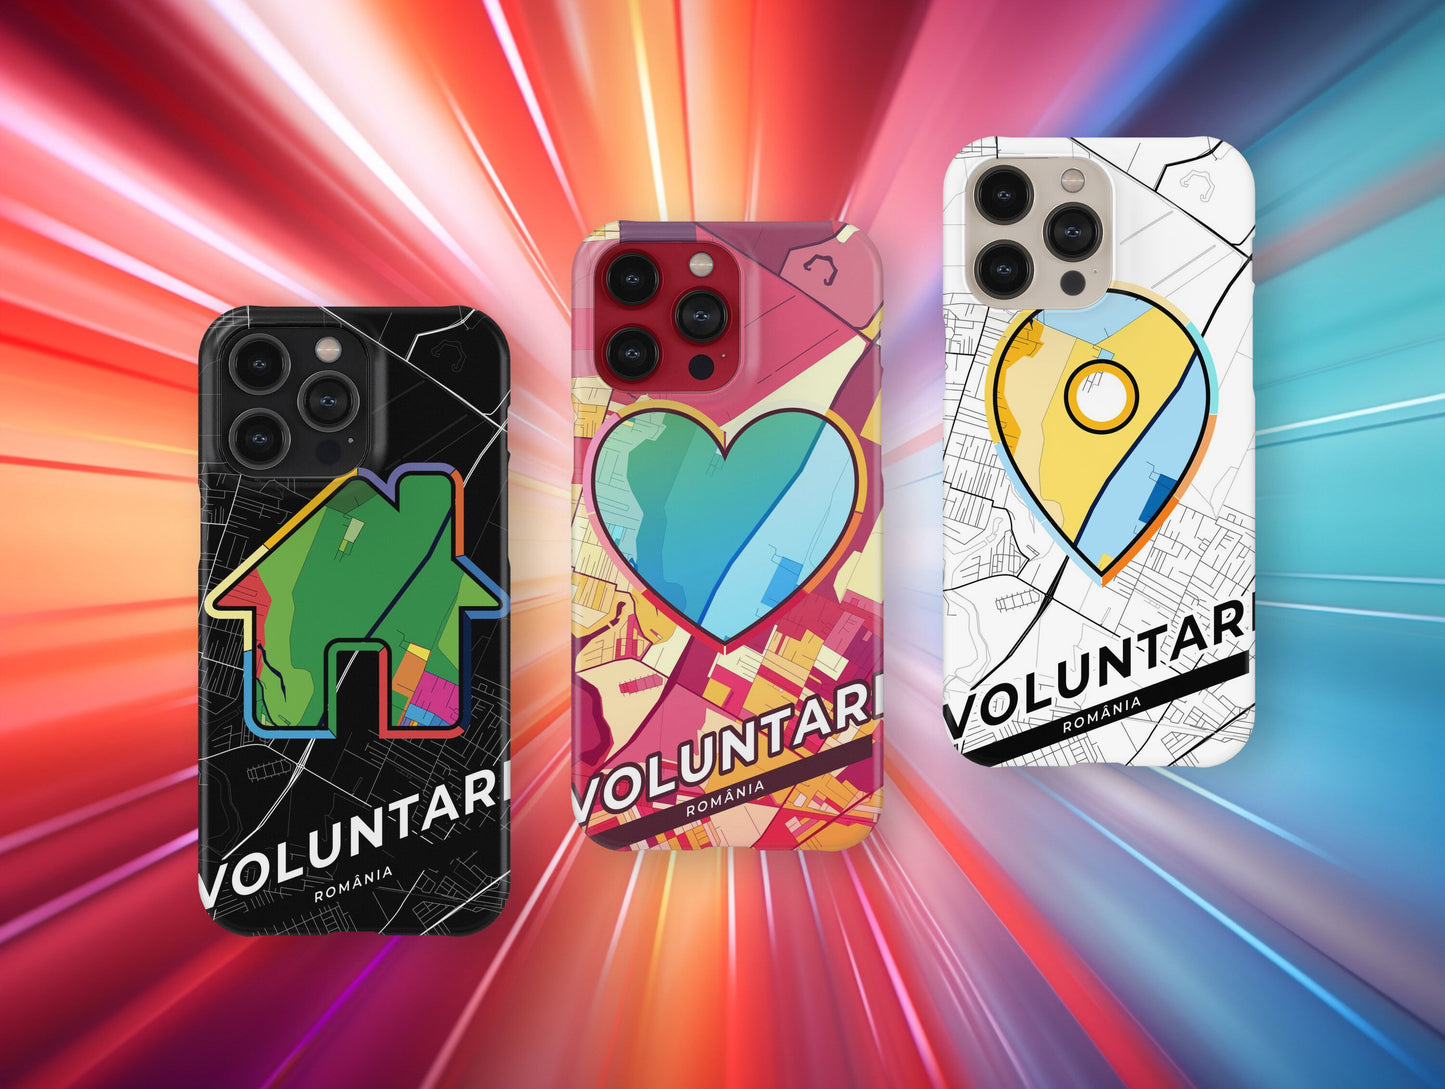 Voluntari Romania slim phone case with colorful icon